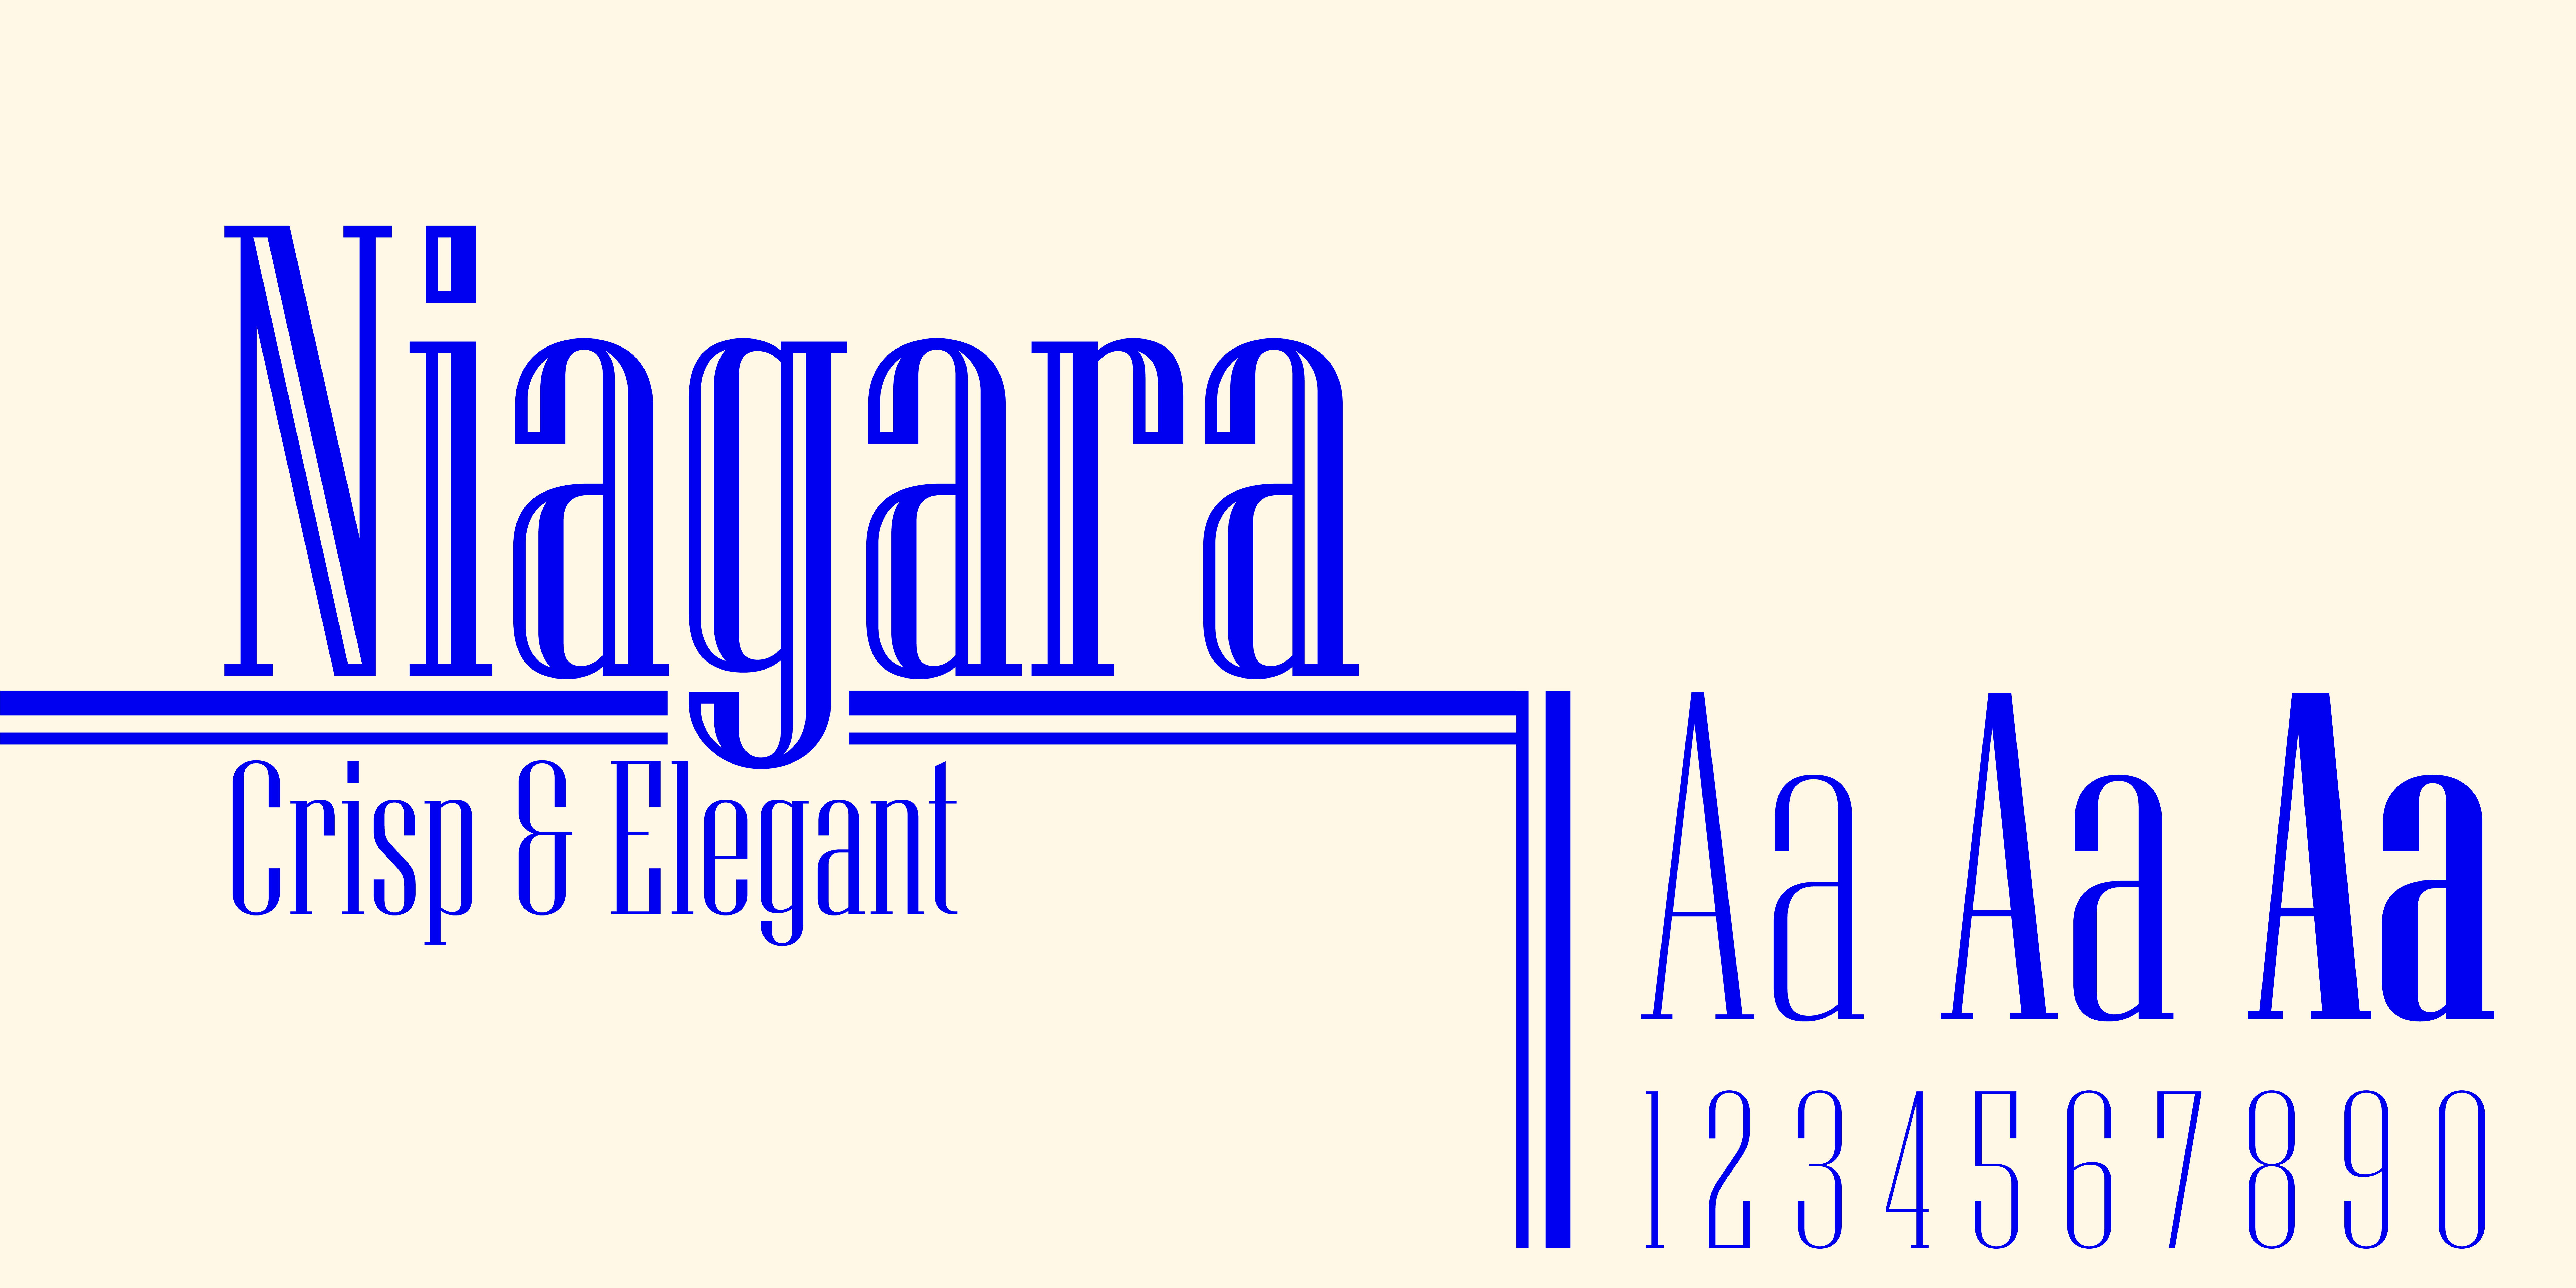 Card displaying Niagara typeface in various styles